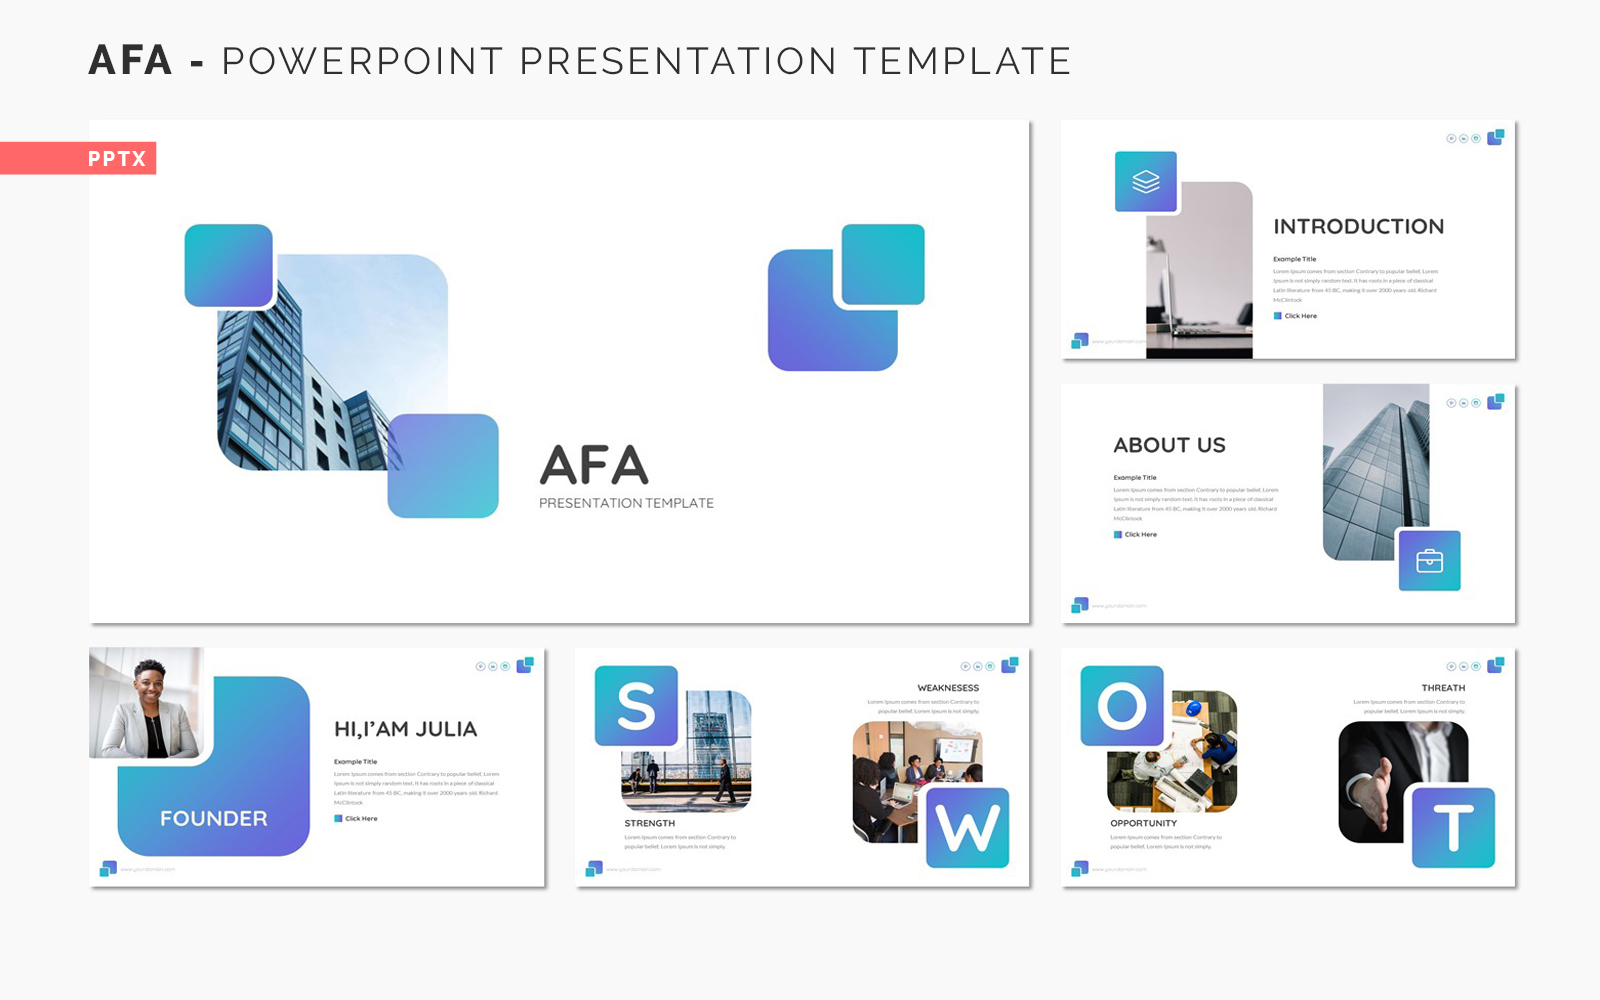 AFA - Powerpoint Presentation Template